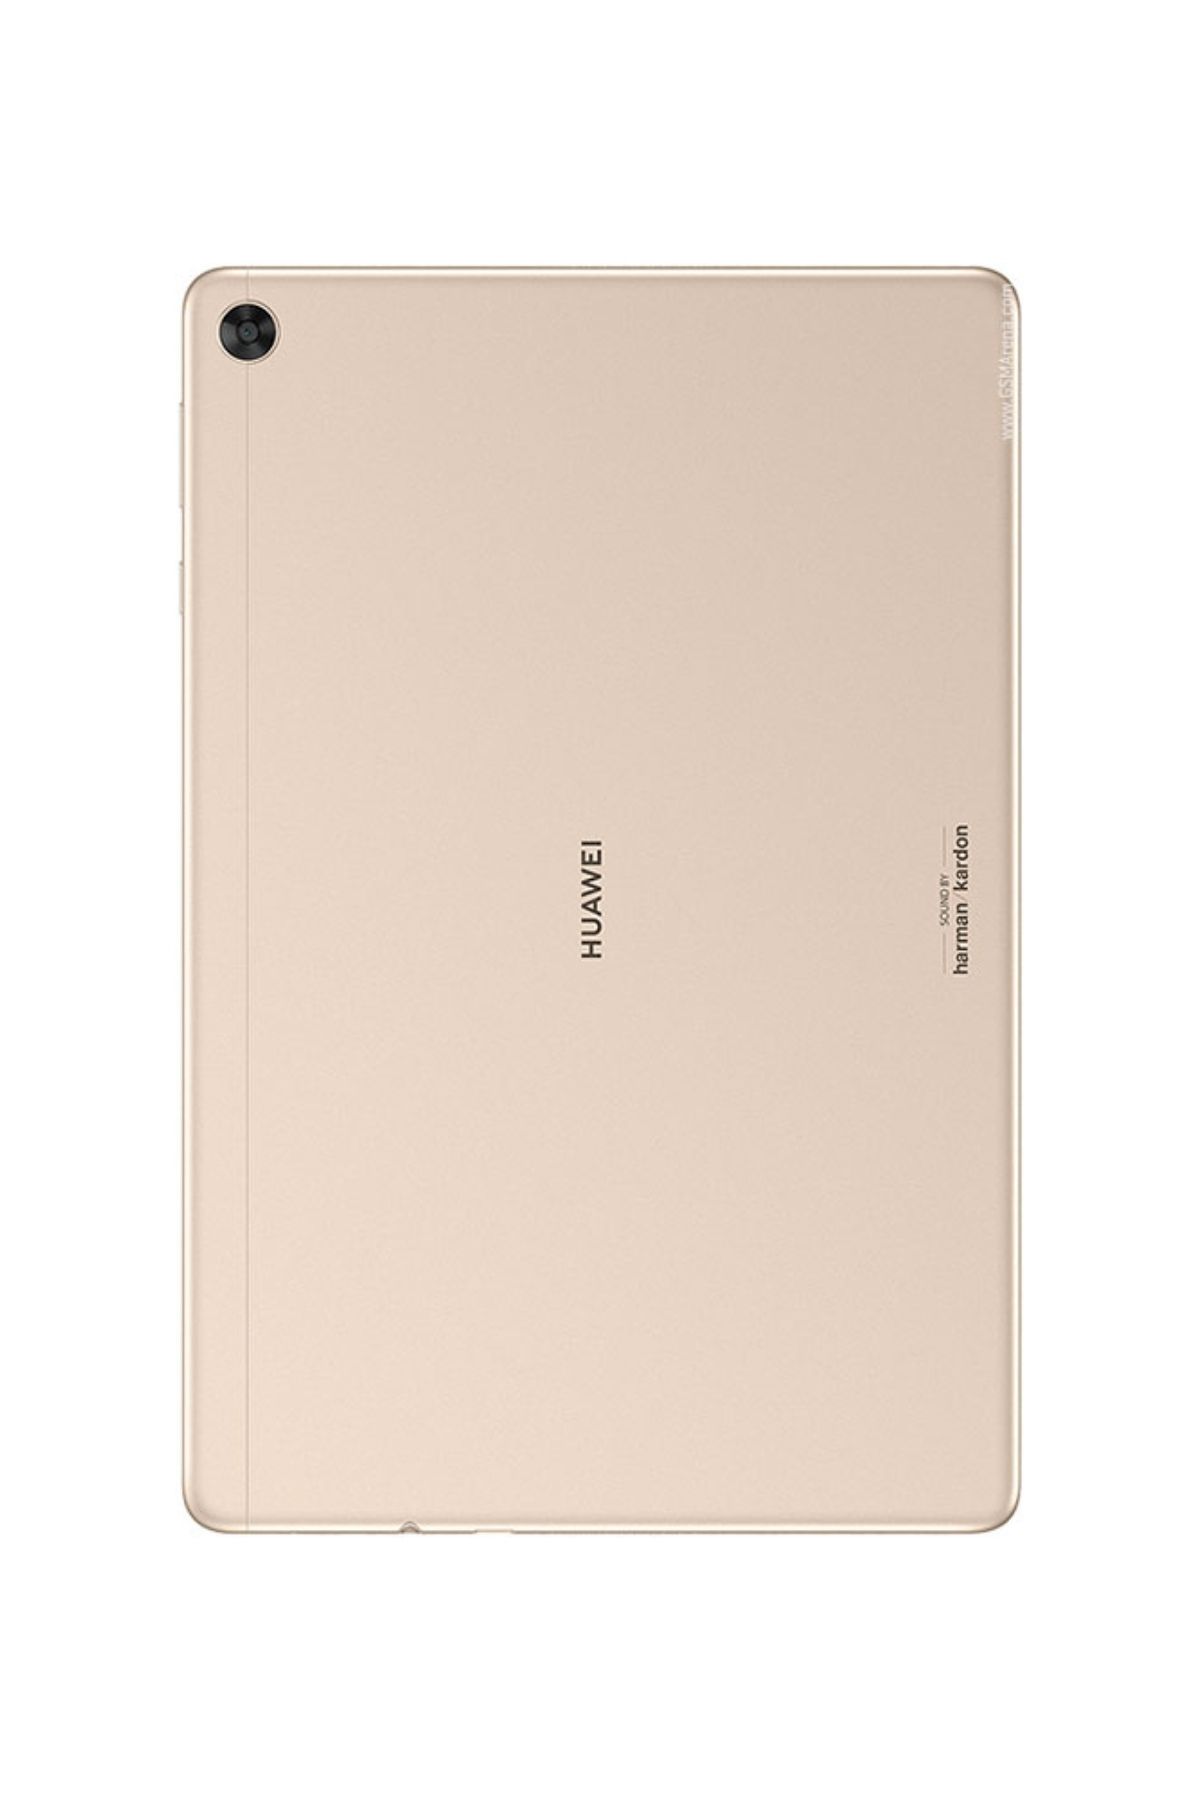 Huawei Tablet Matepad T10S (2+32 GB) 